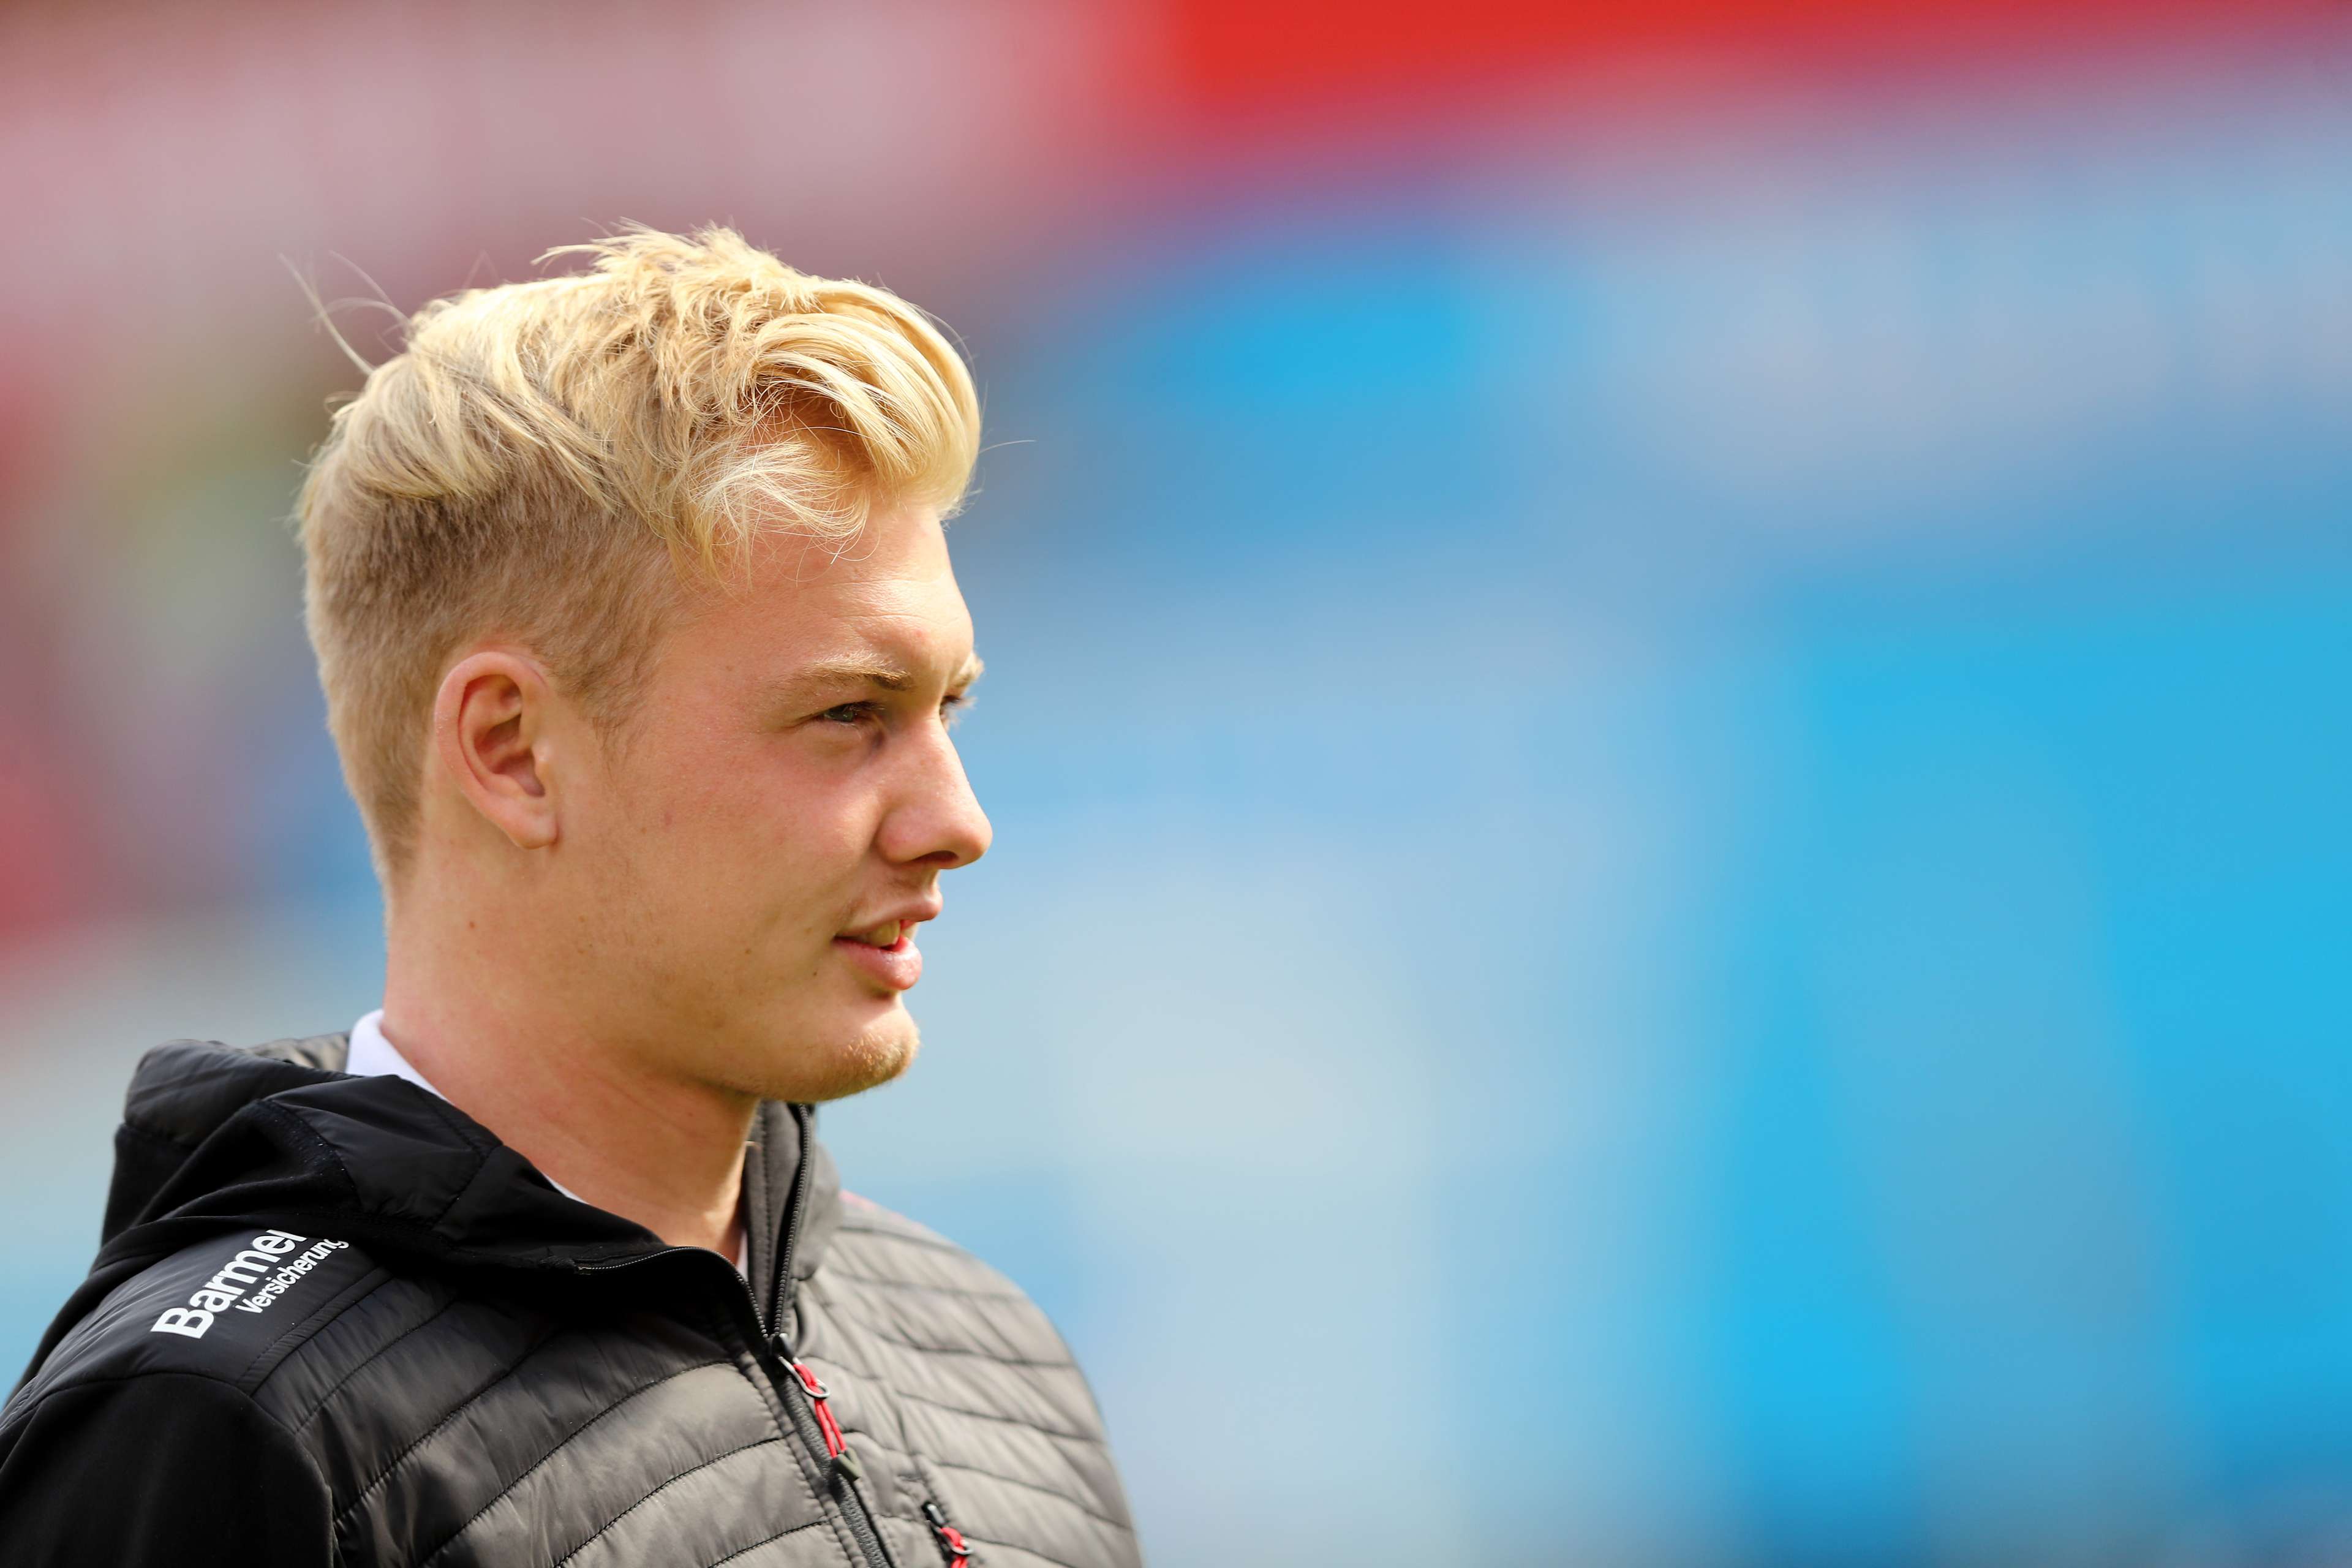 Julian Brandt Bayer Leverkusen